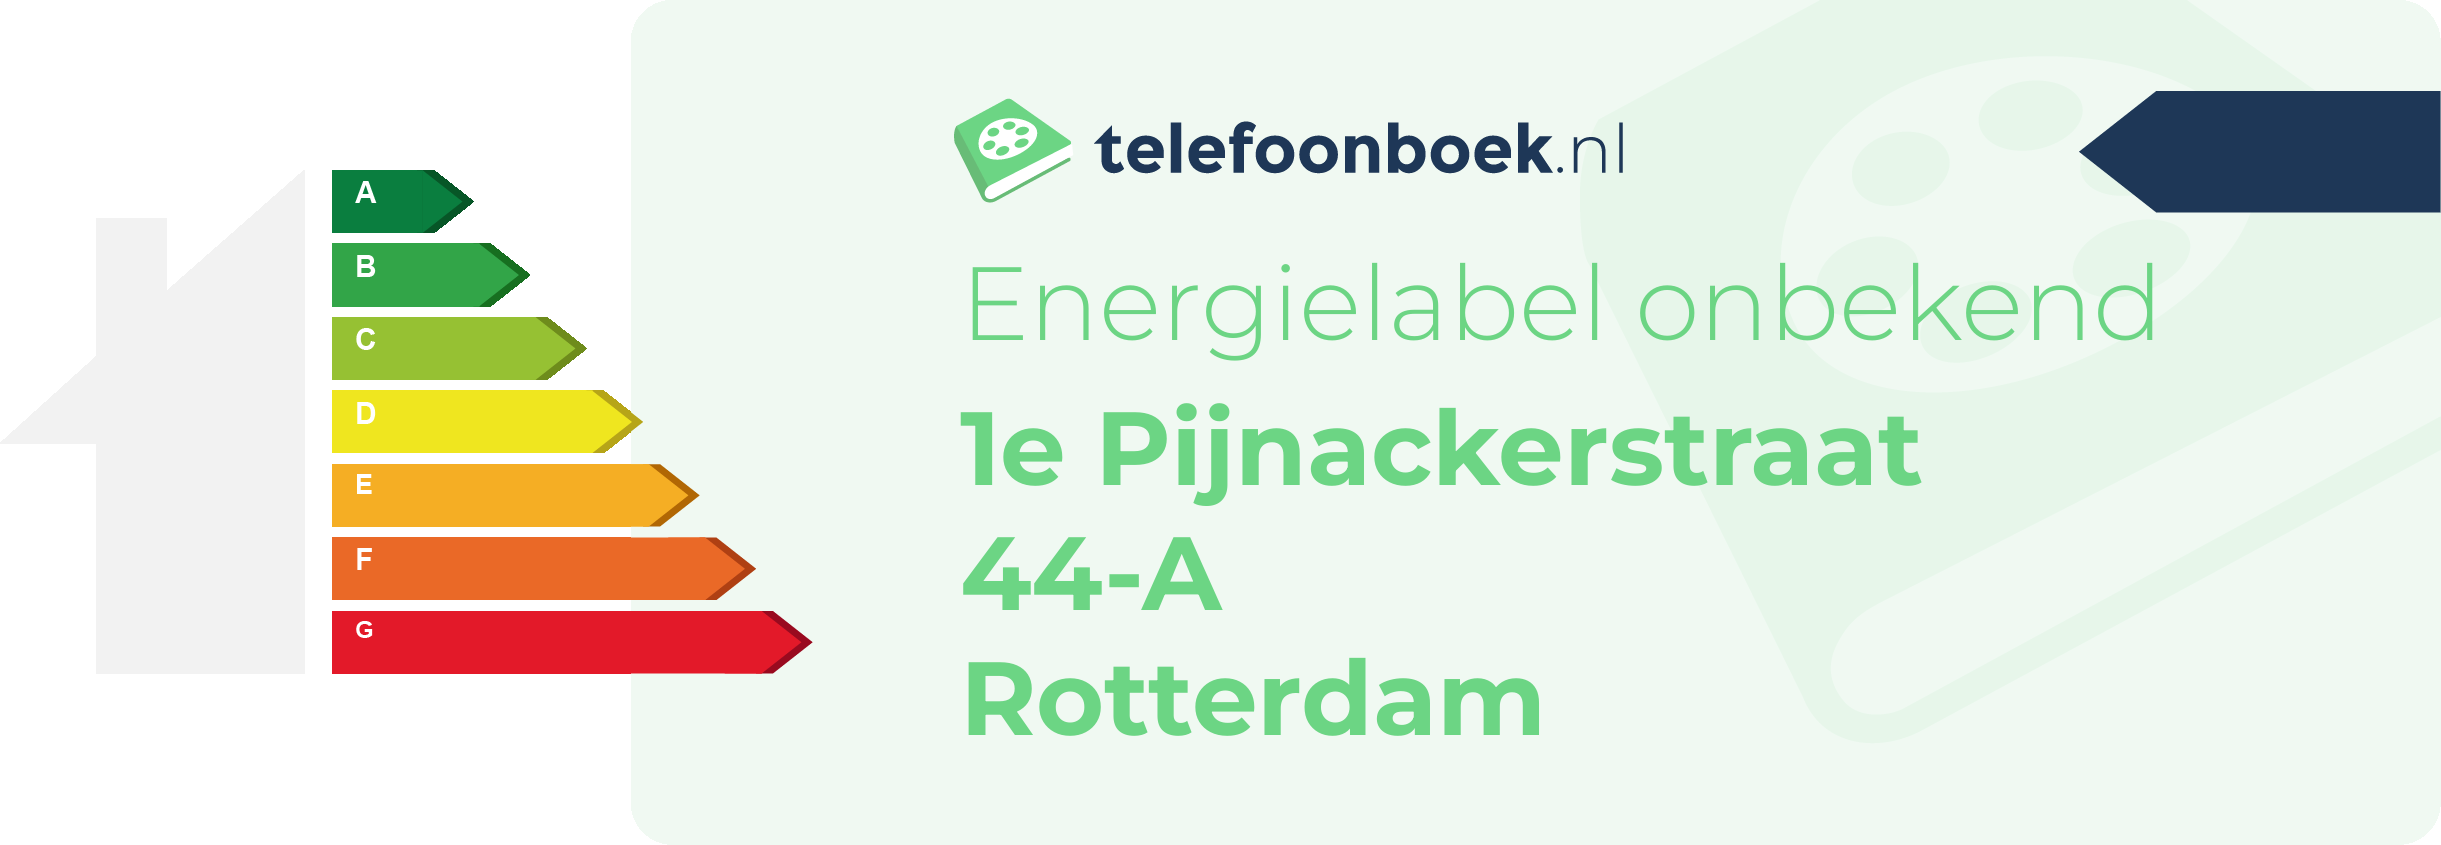 Energielabel 1e Pijnackerstraat 44-A Rotterdam